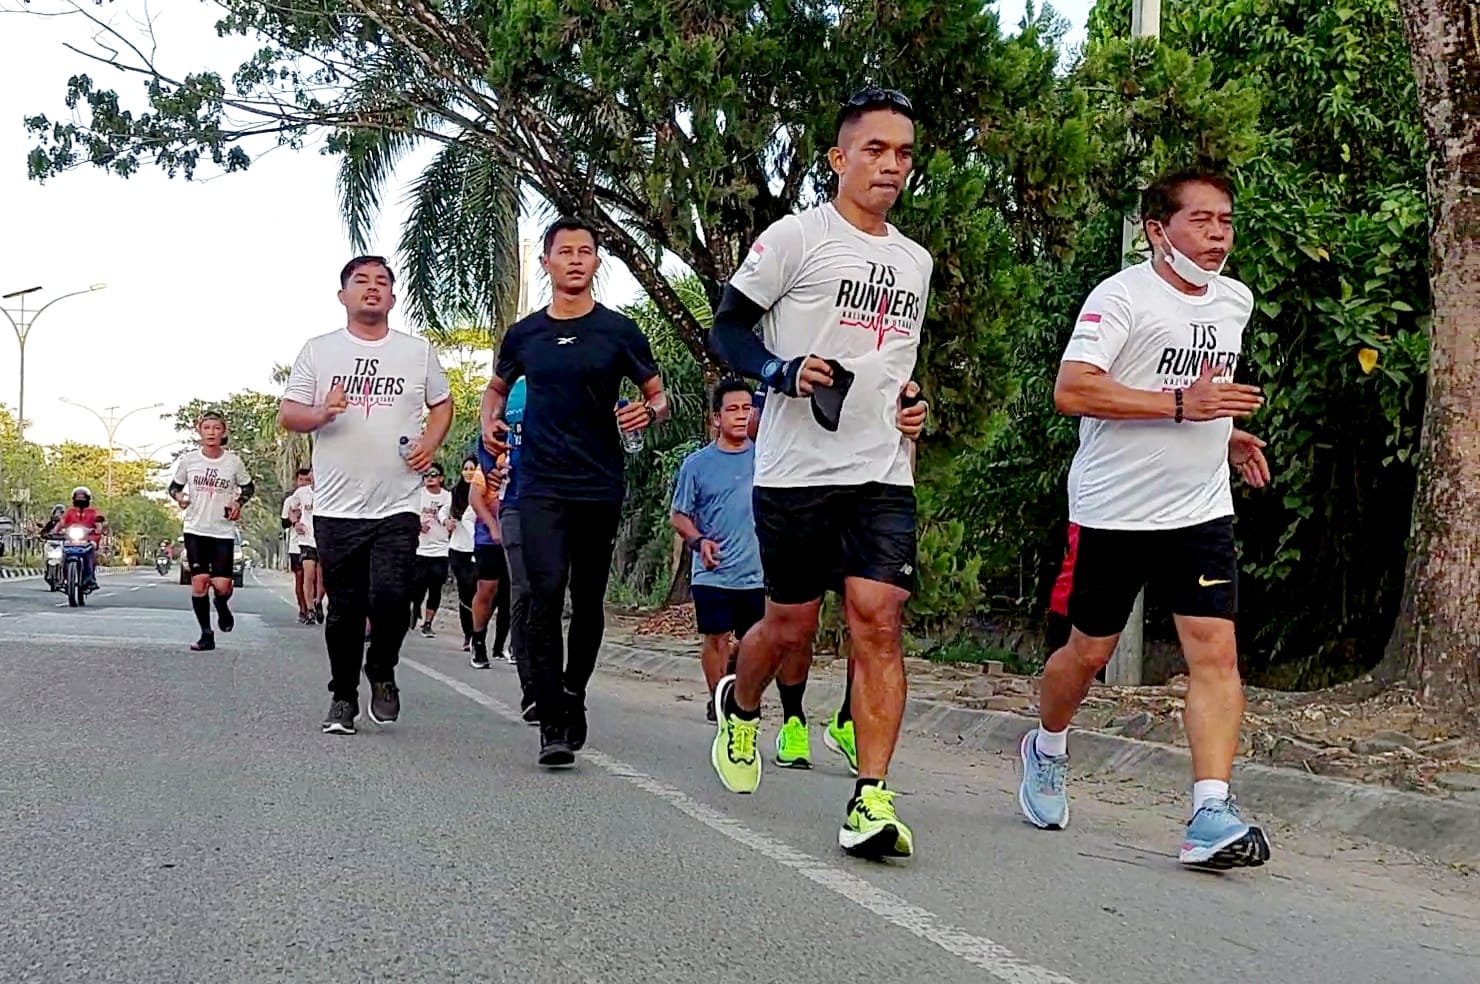 Jogging Bersama Tjs Runners, Gubernur Imbau Masyarakat Rutin Berolahraga